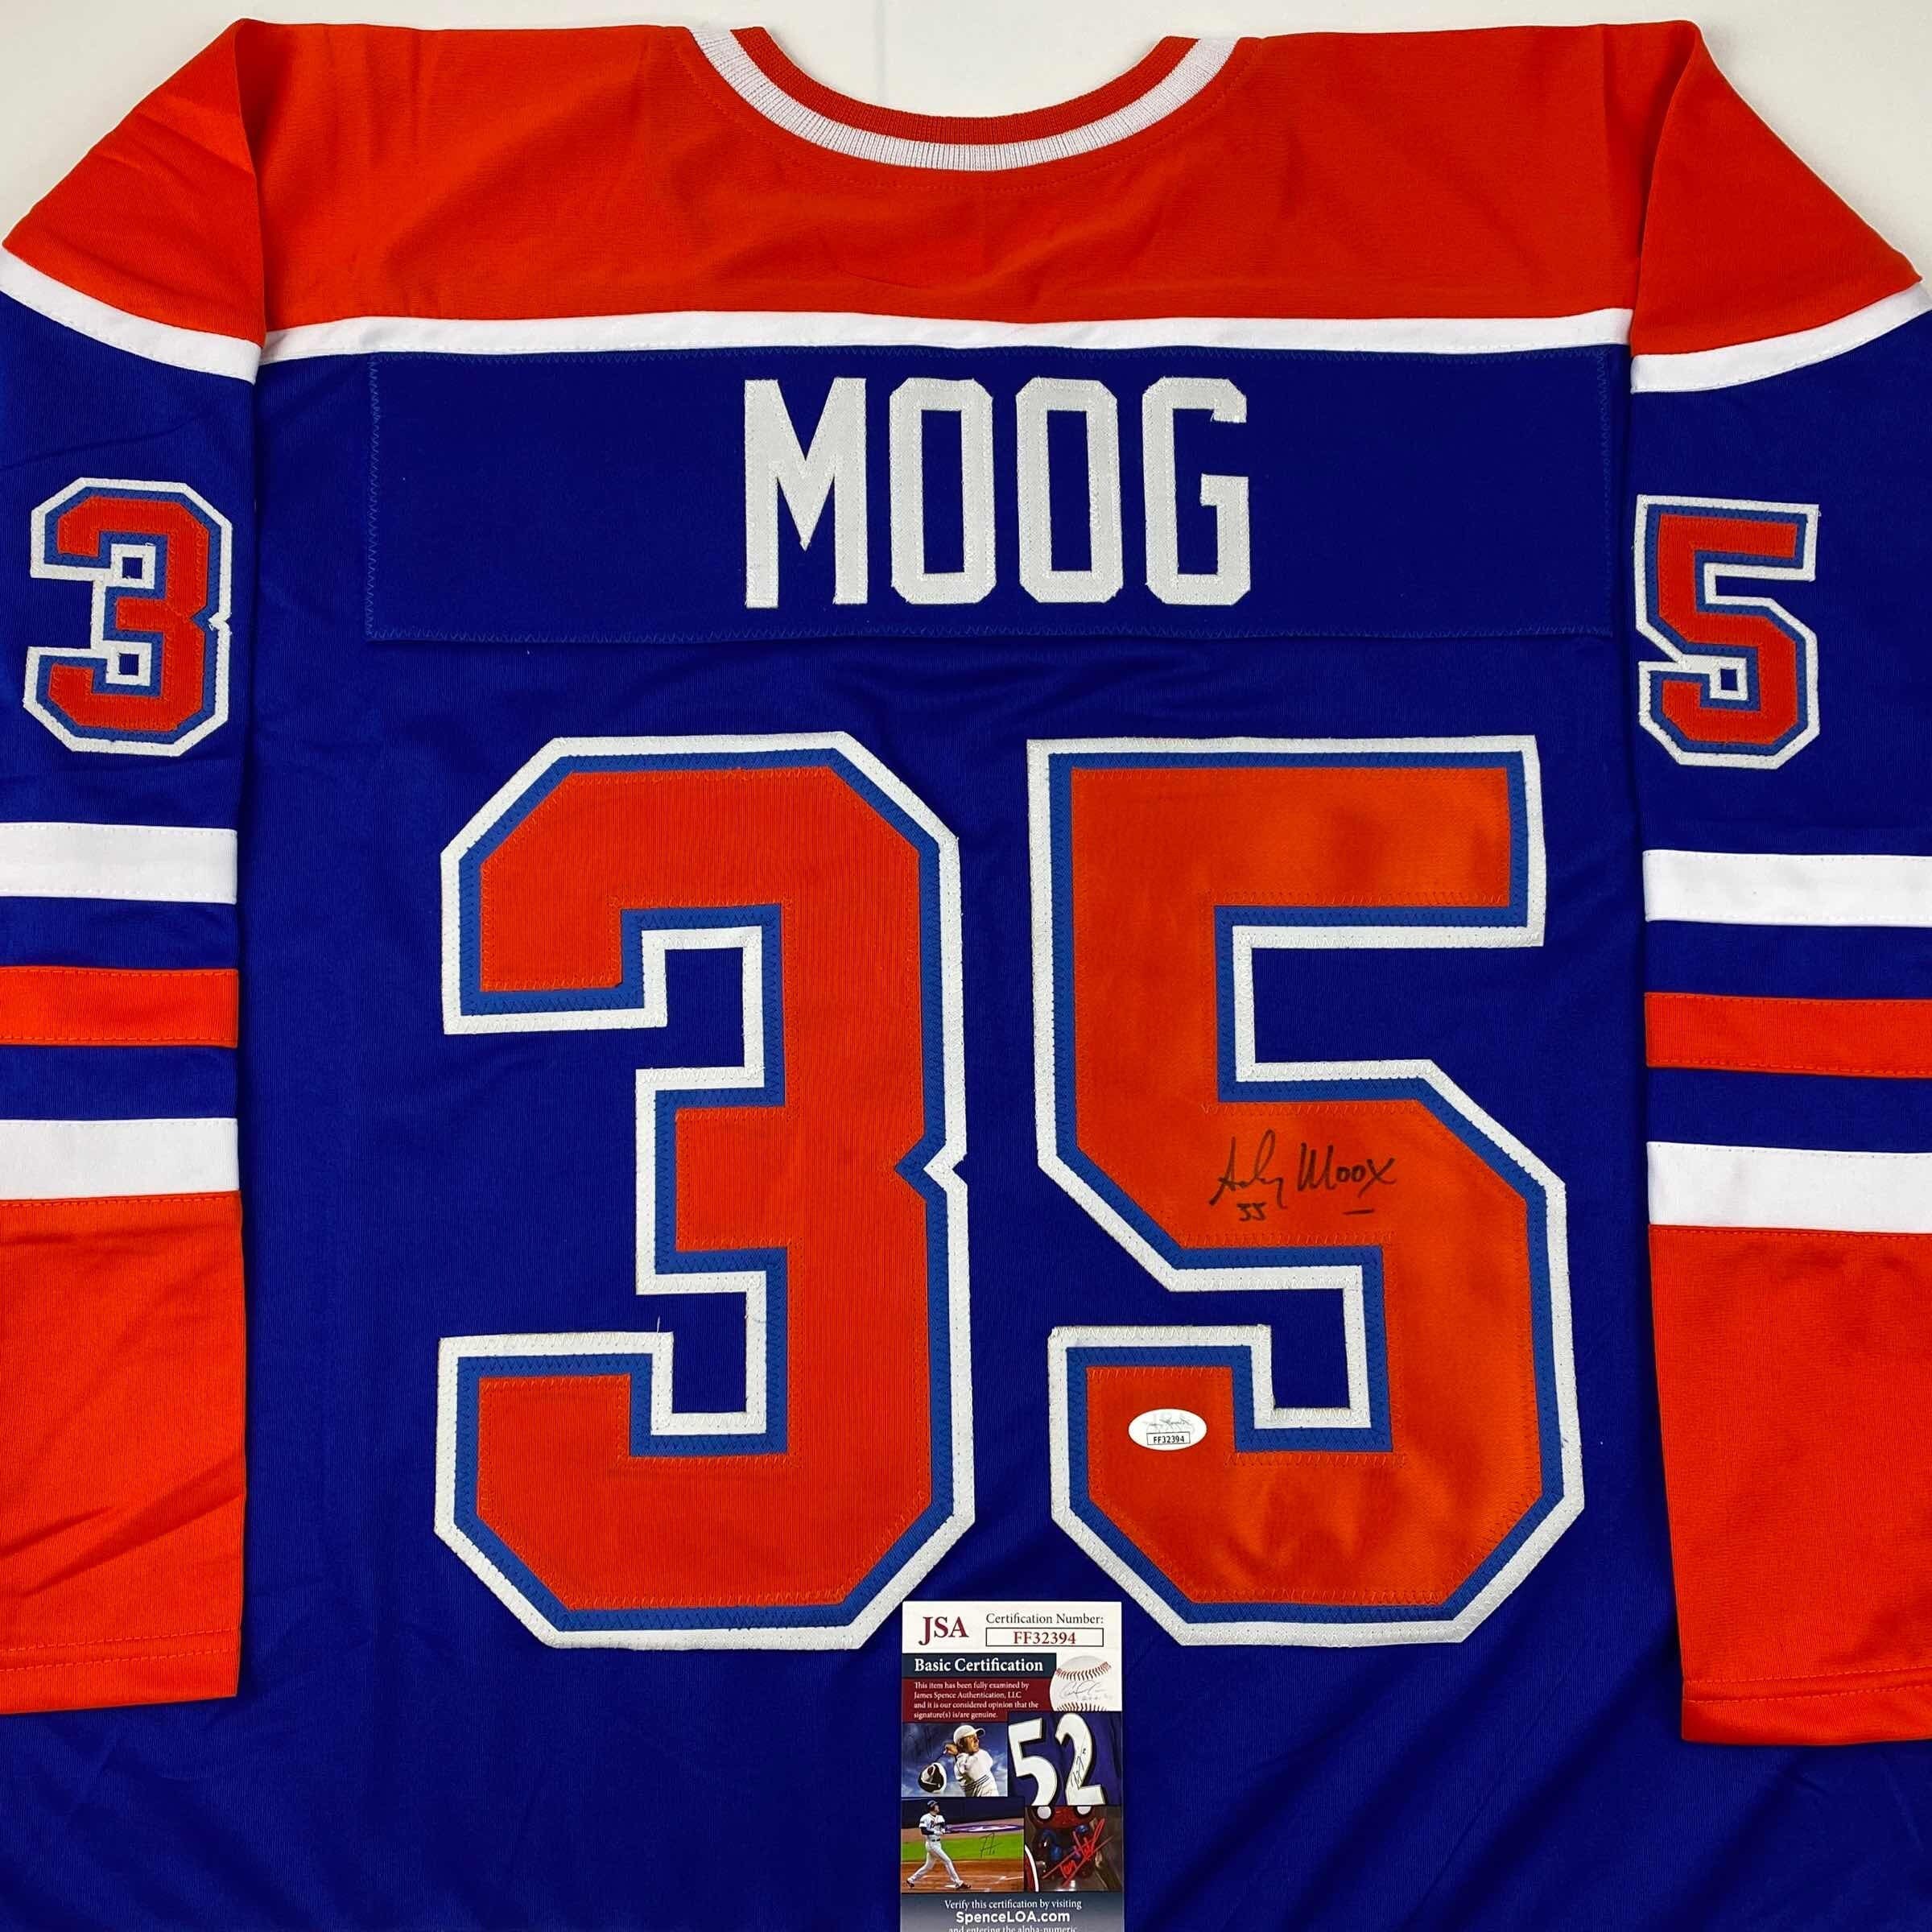 Andy Moog Autographed Custom Edmonton Oilers Style Road Jersey w